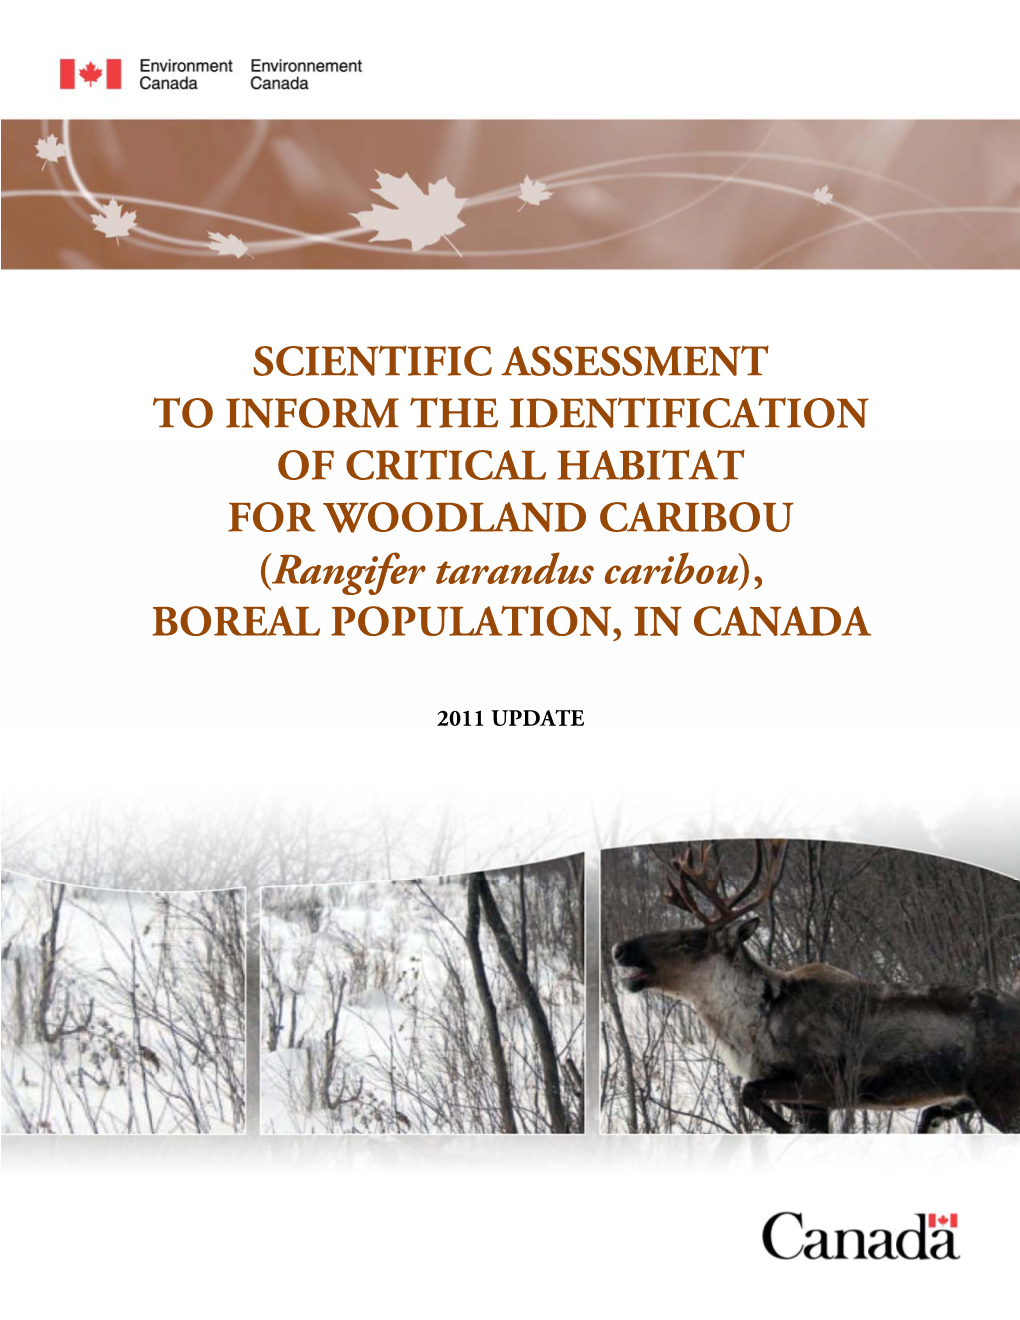 SCIENTIFIC ASSESSMENT to INFORM the IDENTIFICATION of CRITICAL HABITAT for WOODLAND CARIBOU (Rangifer Tarandus Caribou), BOREAL POPULATION, in CANADA